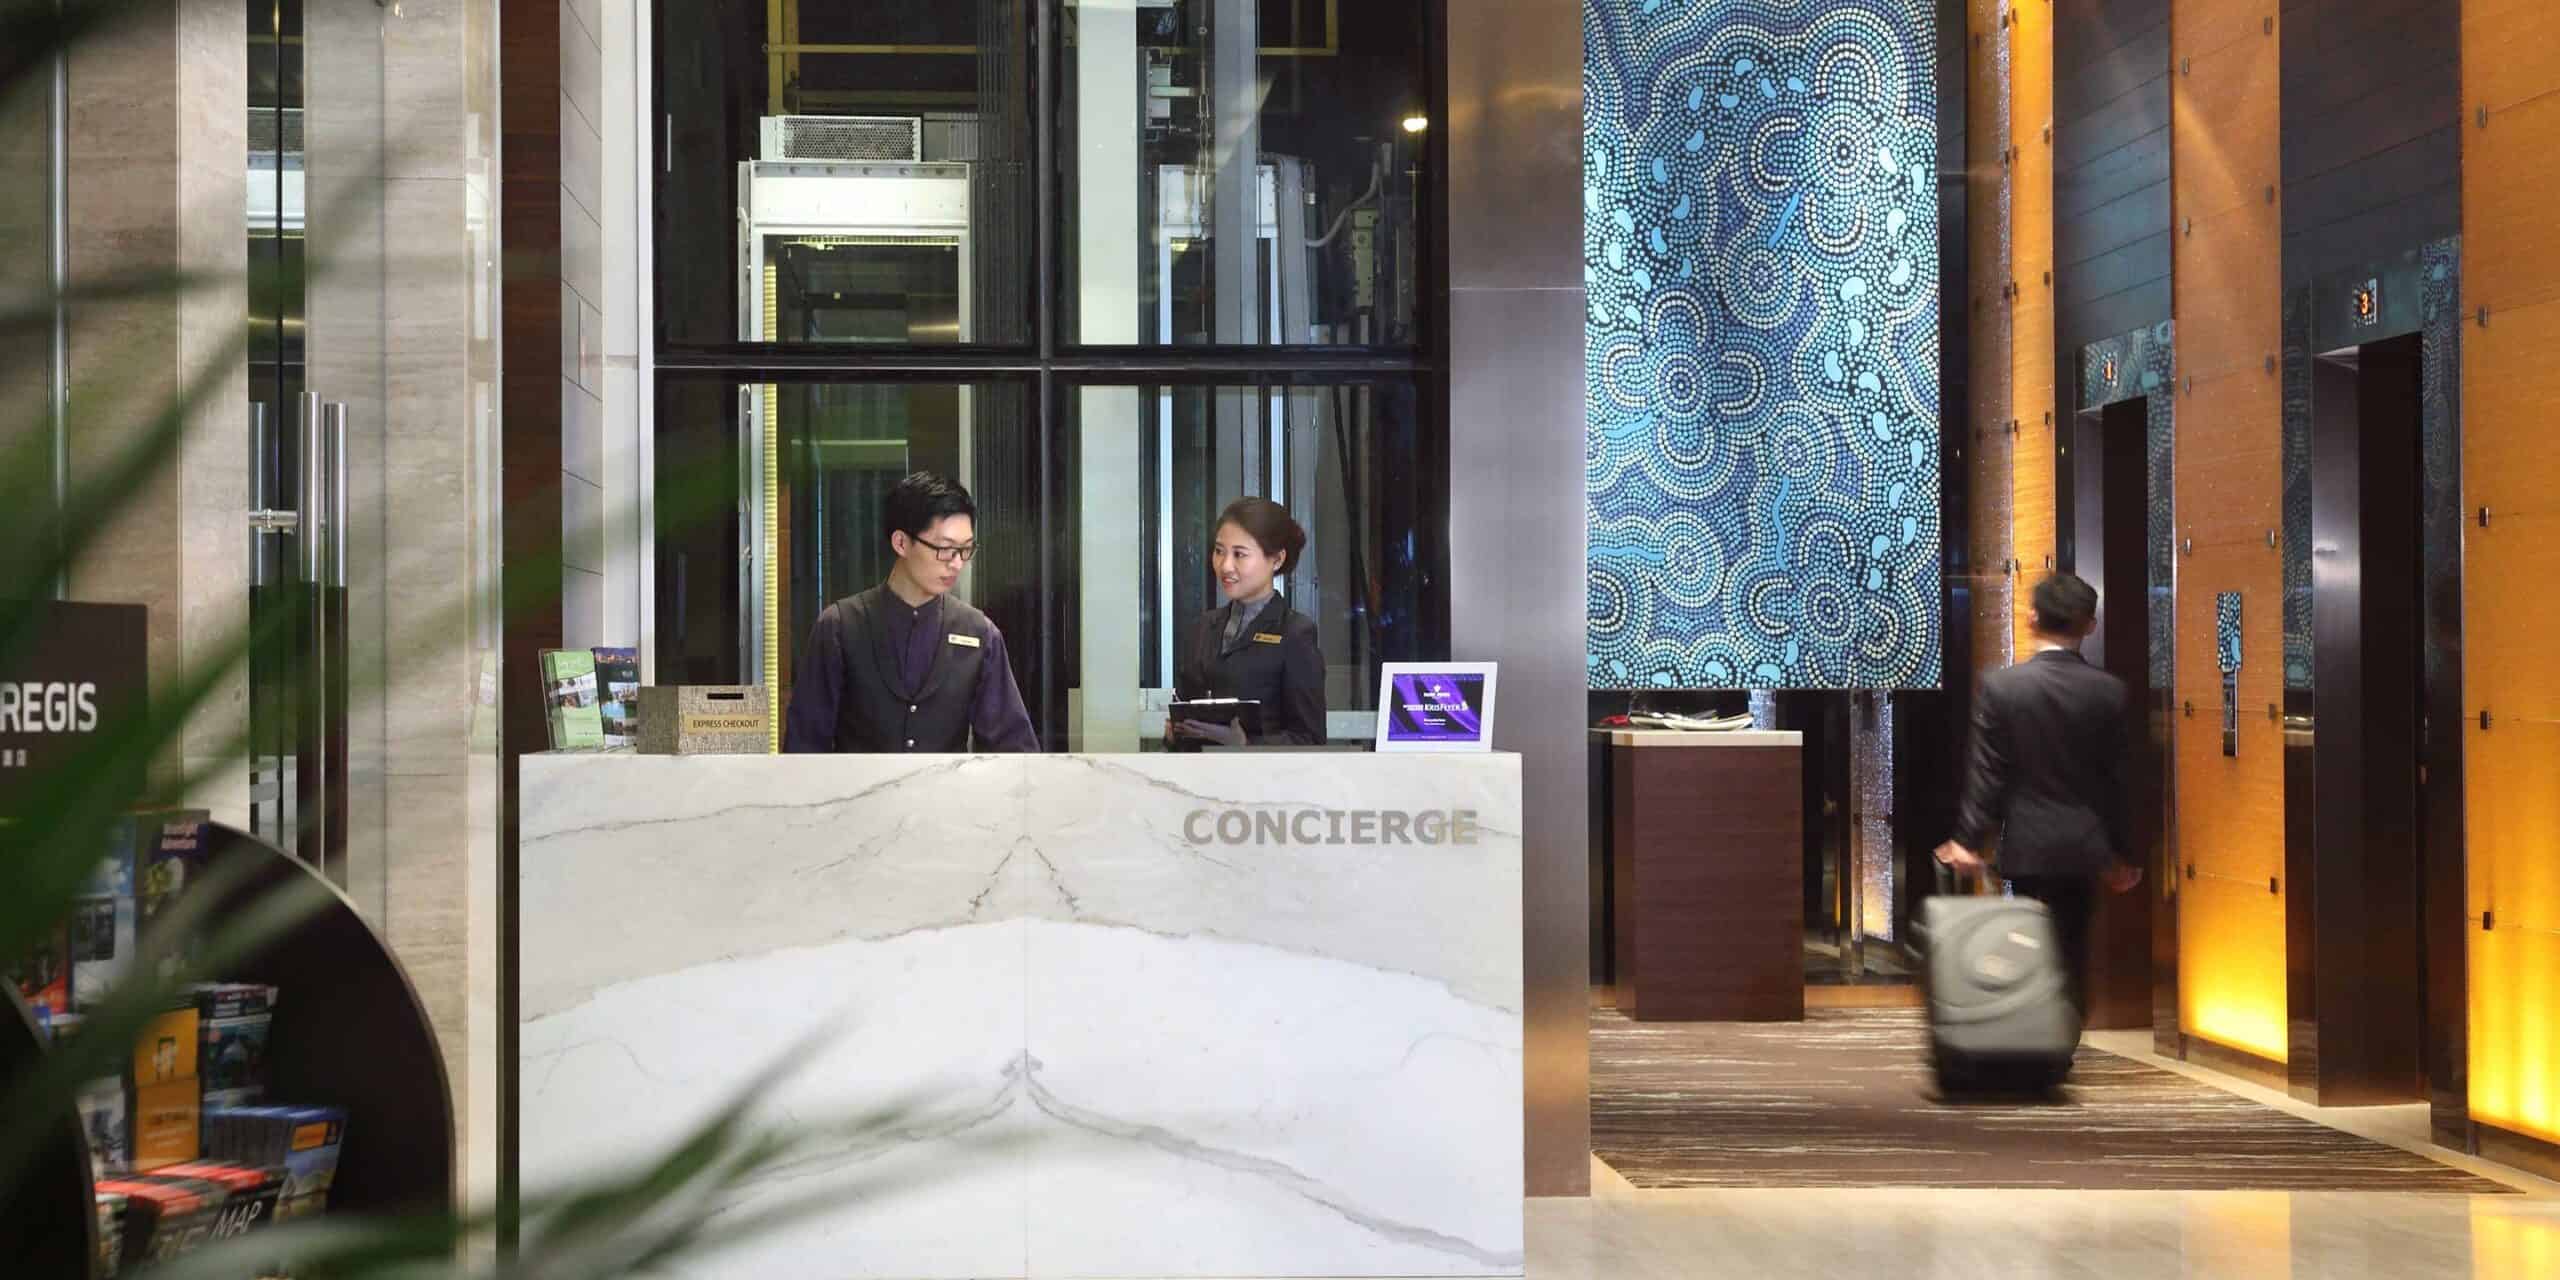 Park Regis Singapore Hotel Concierge